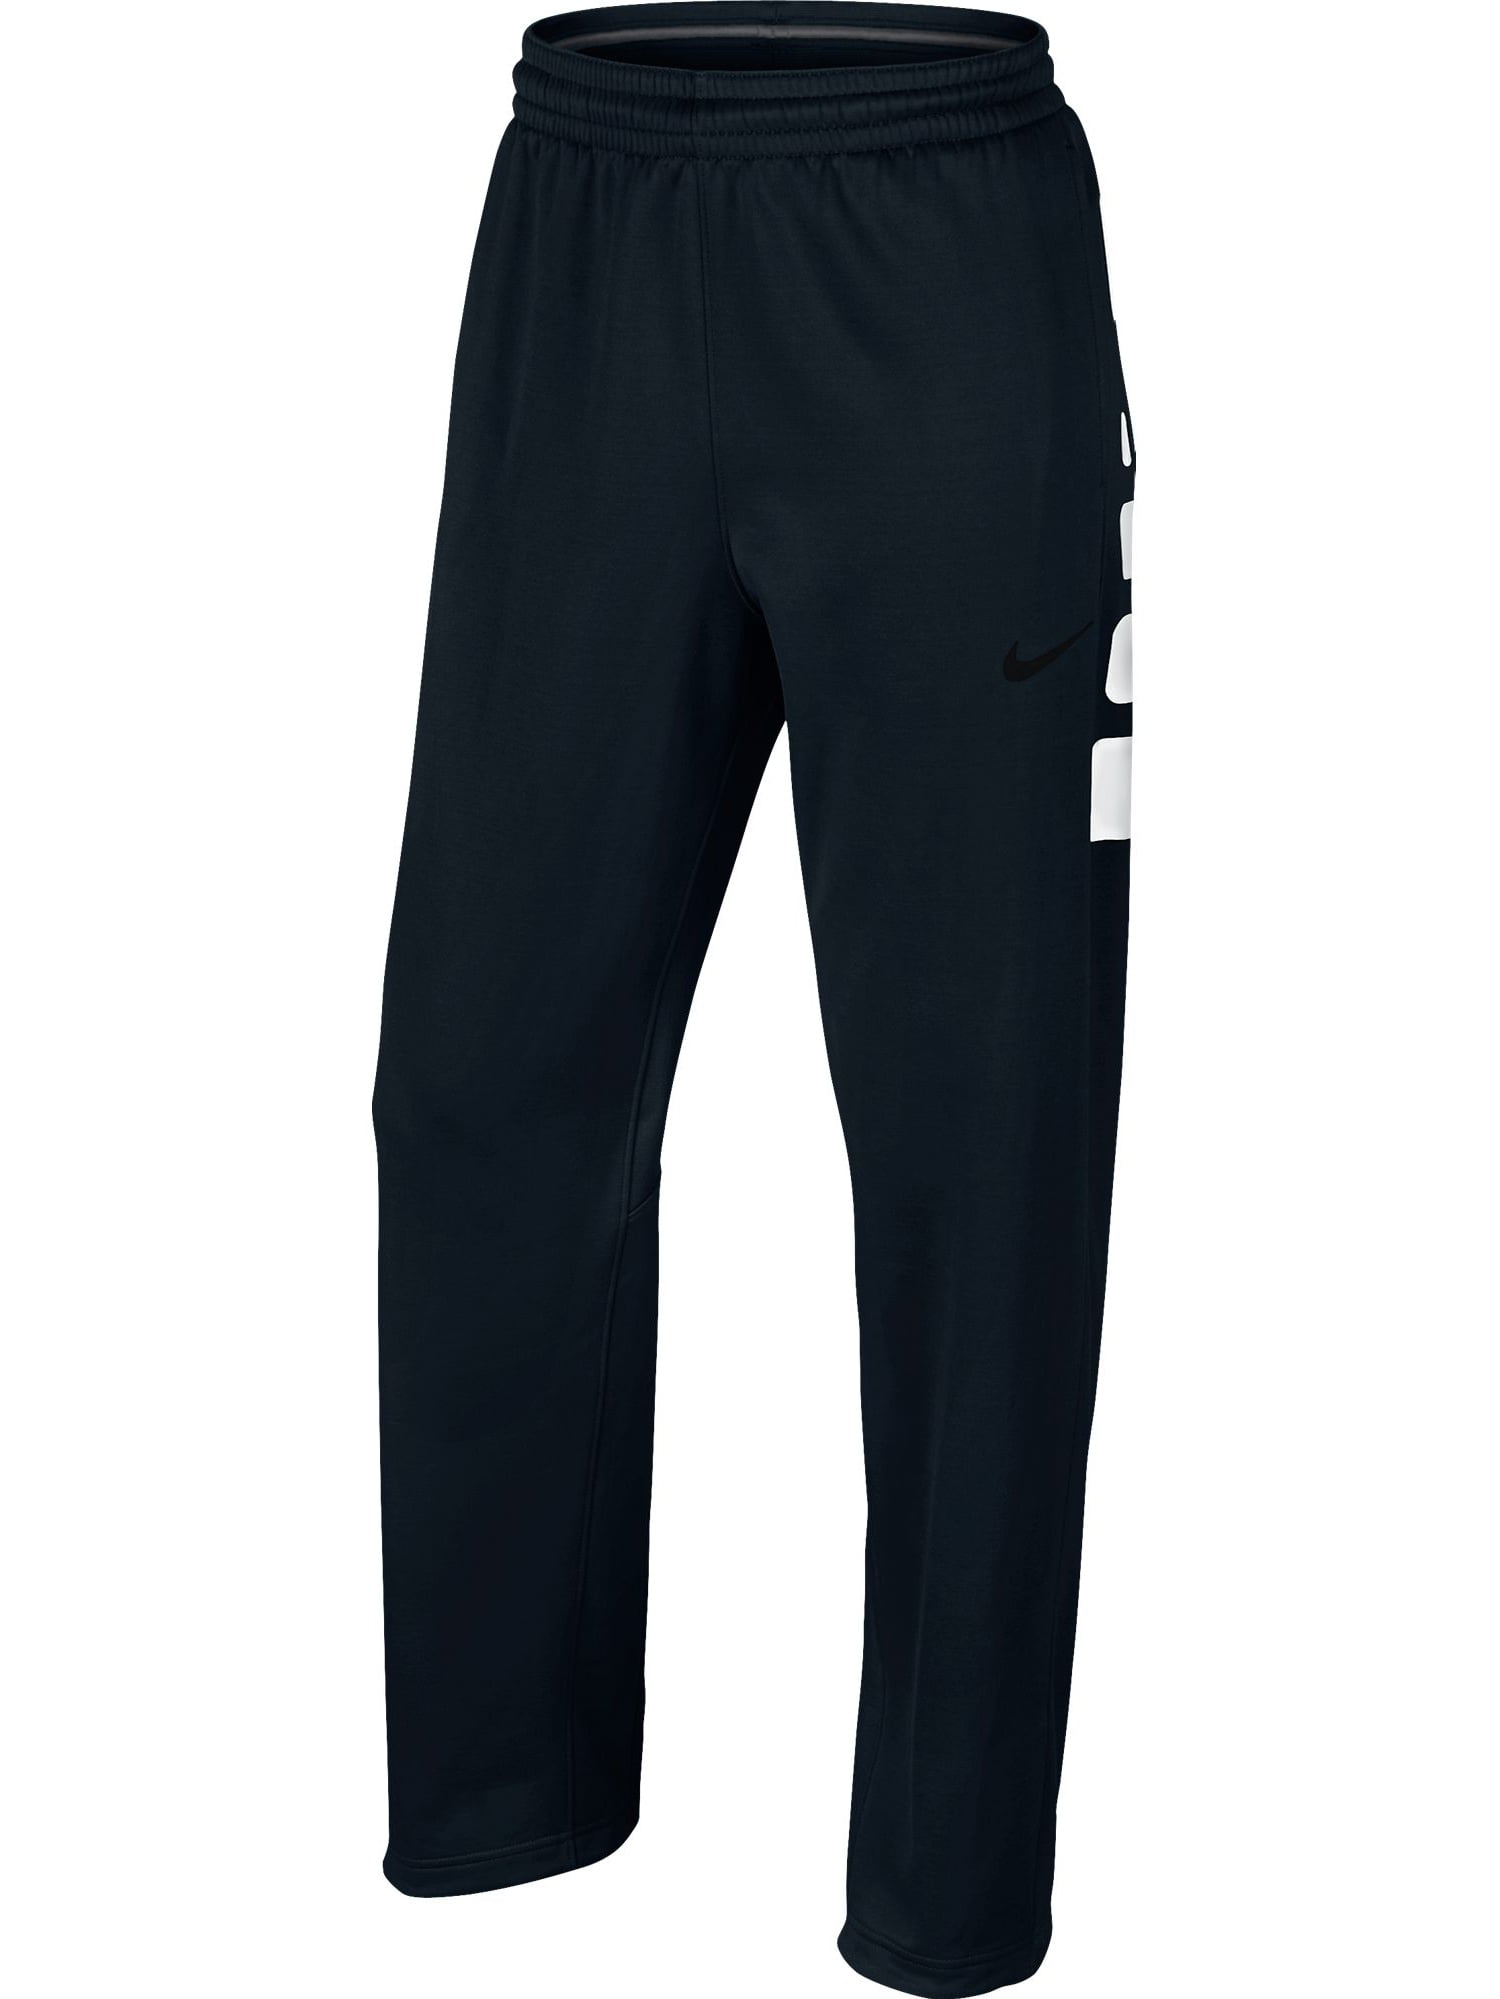 blæse hul pad Pris Nike Elite Stripe Basketball Men's Pants Athletic Black/White 682999-011 -  Walmart.com